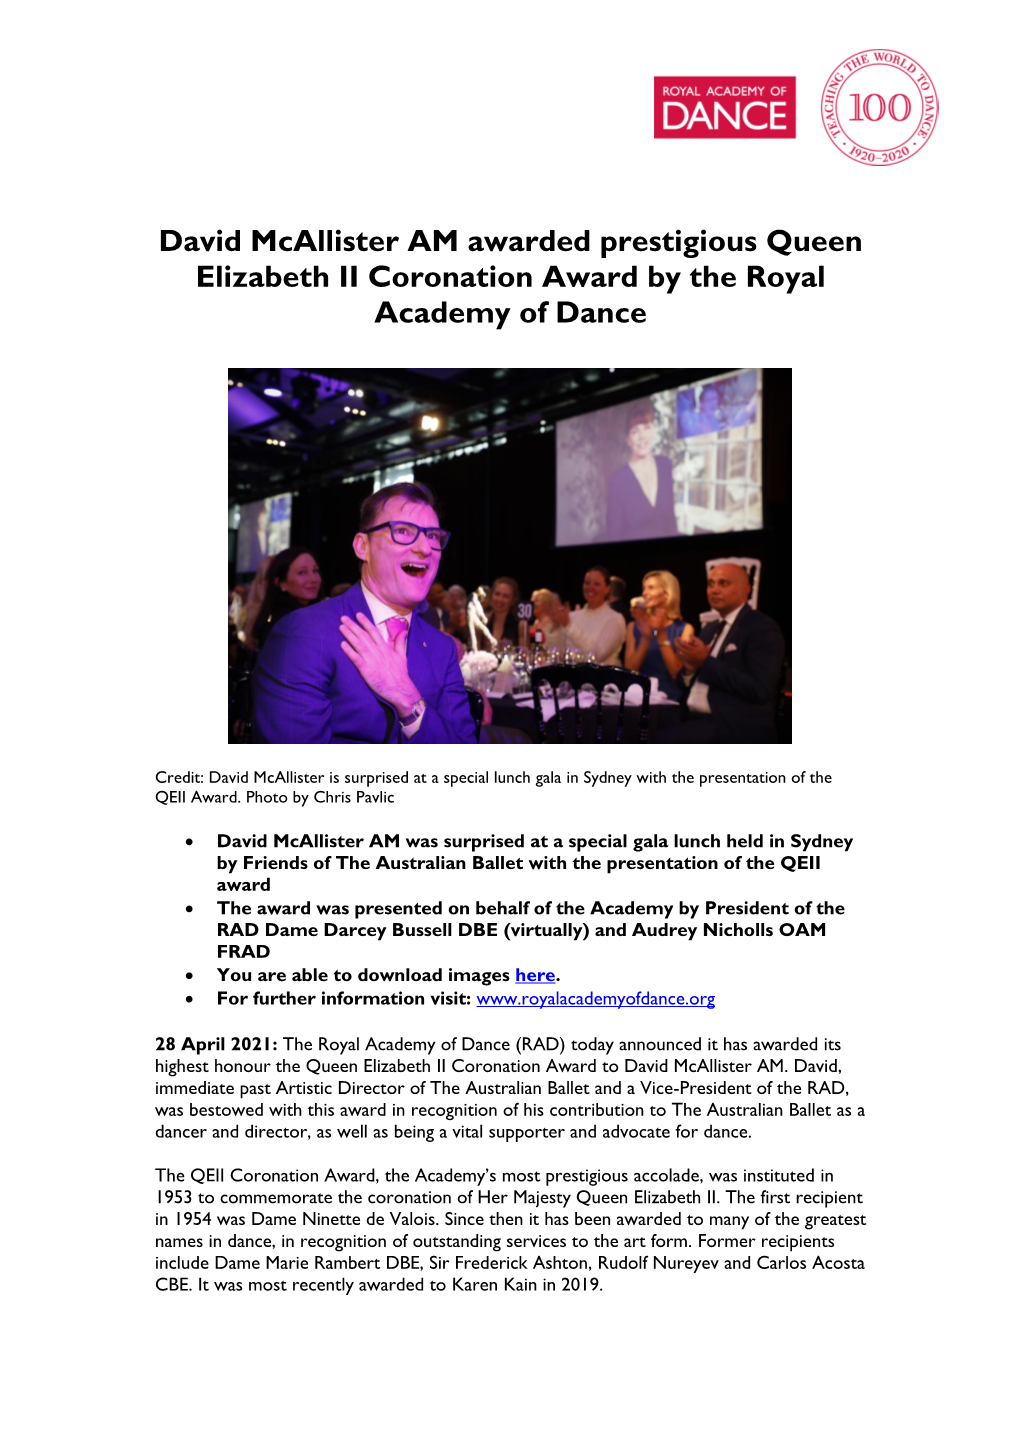 David Mcallister AM Awarded Prestigious Queen Elizabeth II Coronation Award by the Royal Academy of Dance